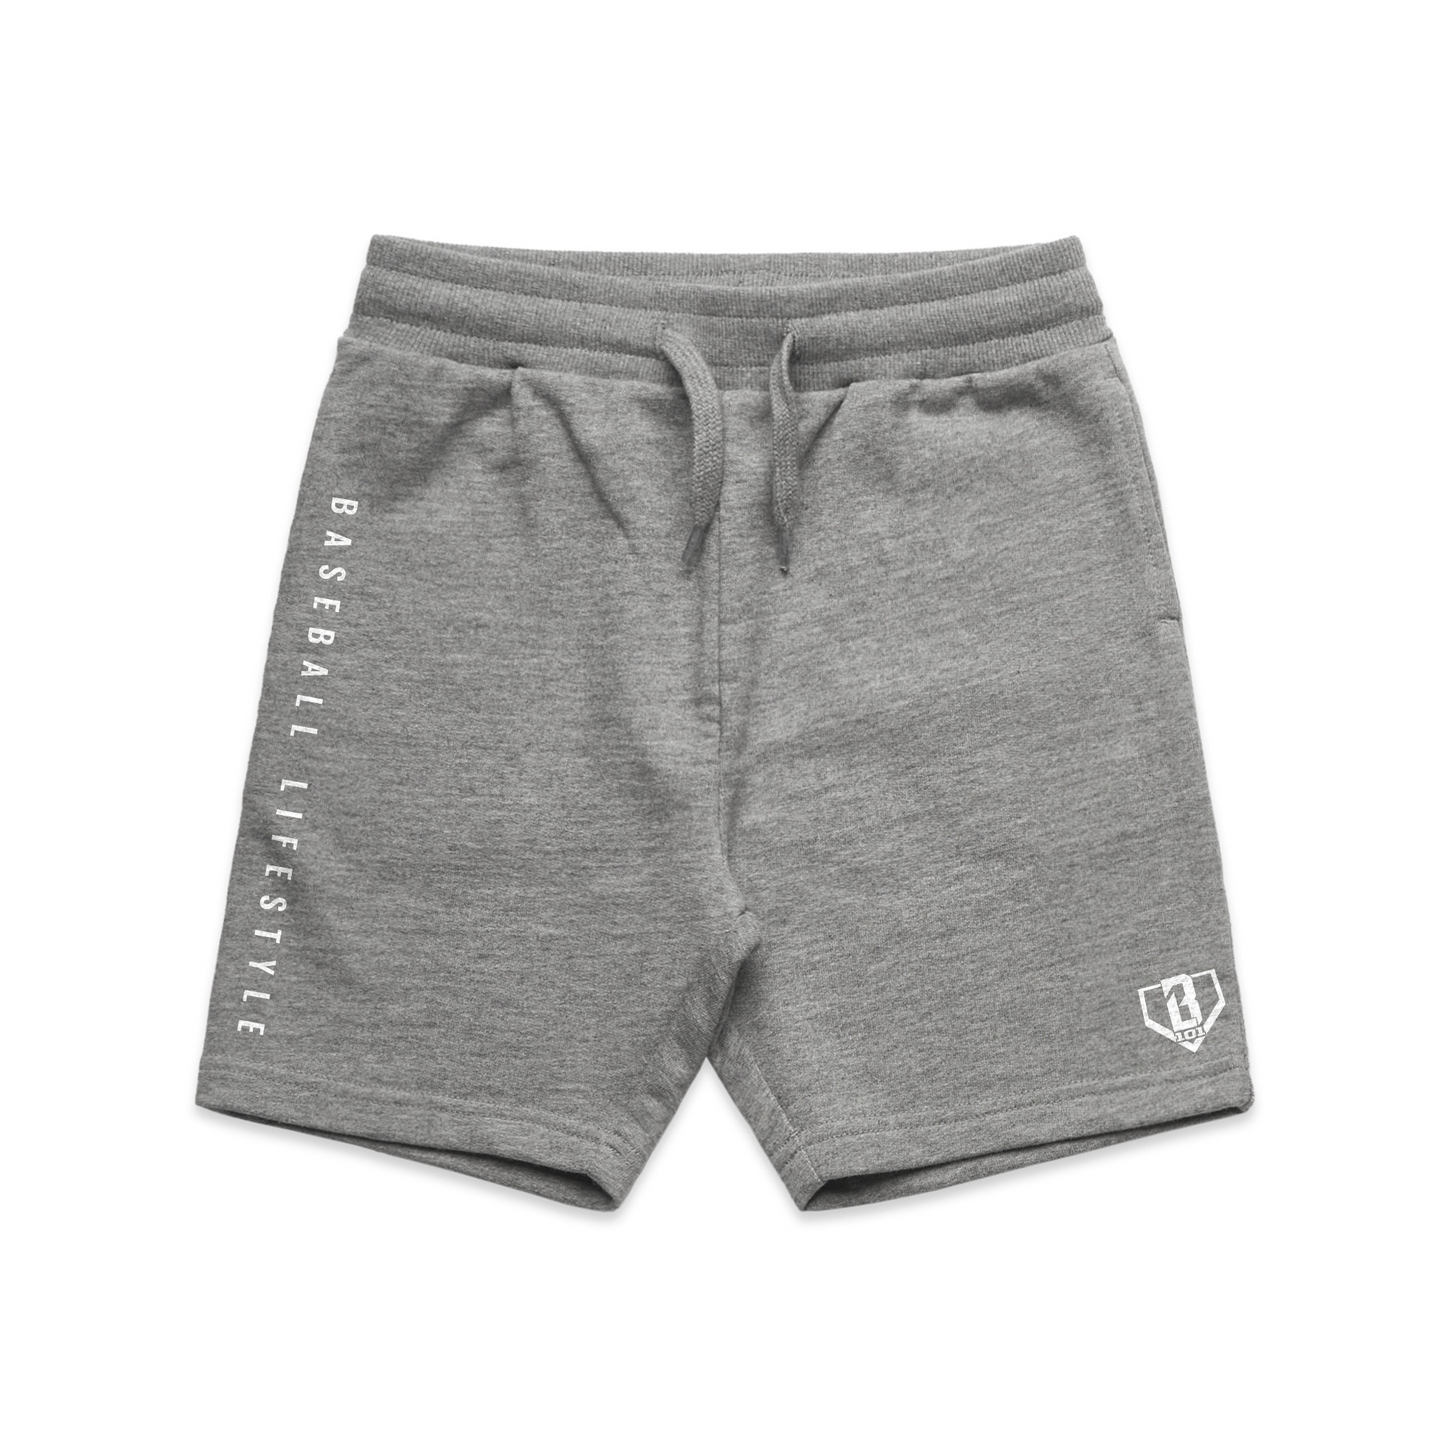 Baseball shorts, baseball sweat shorts